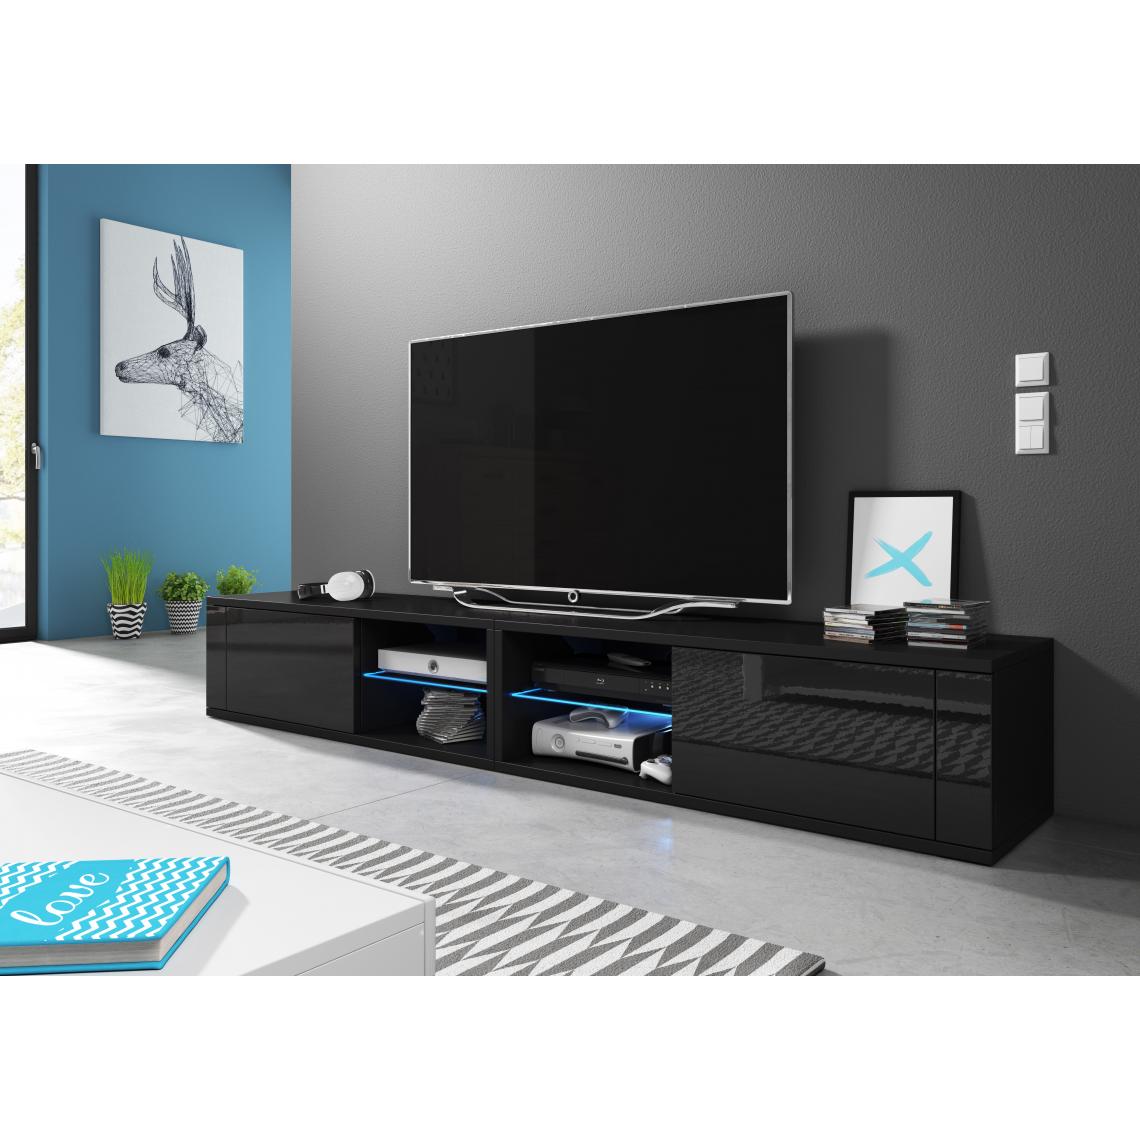 Vivaldi - VIVALDI Meuble TV - BEST DOUBLE - 200 cm - noir mat / noir brillant avec LED - style design - Meubles TV, Hi-Fi